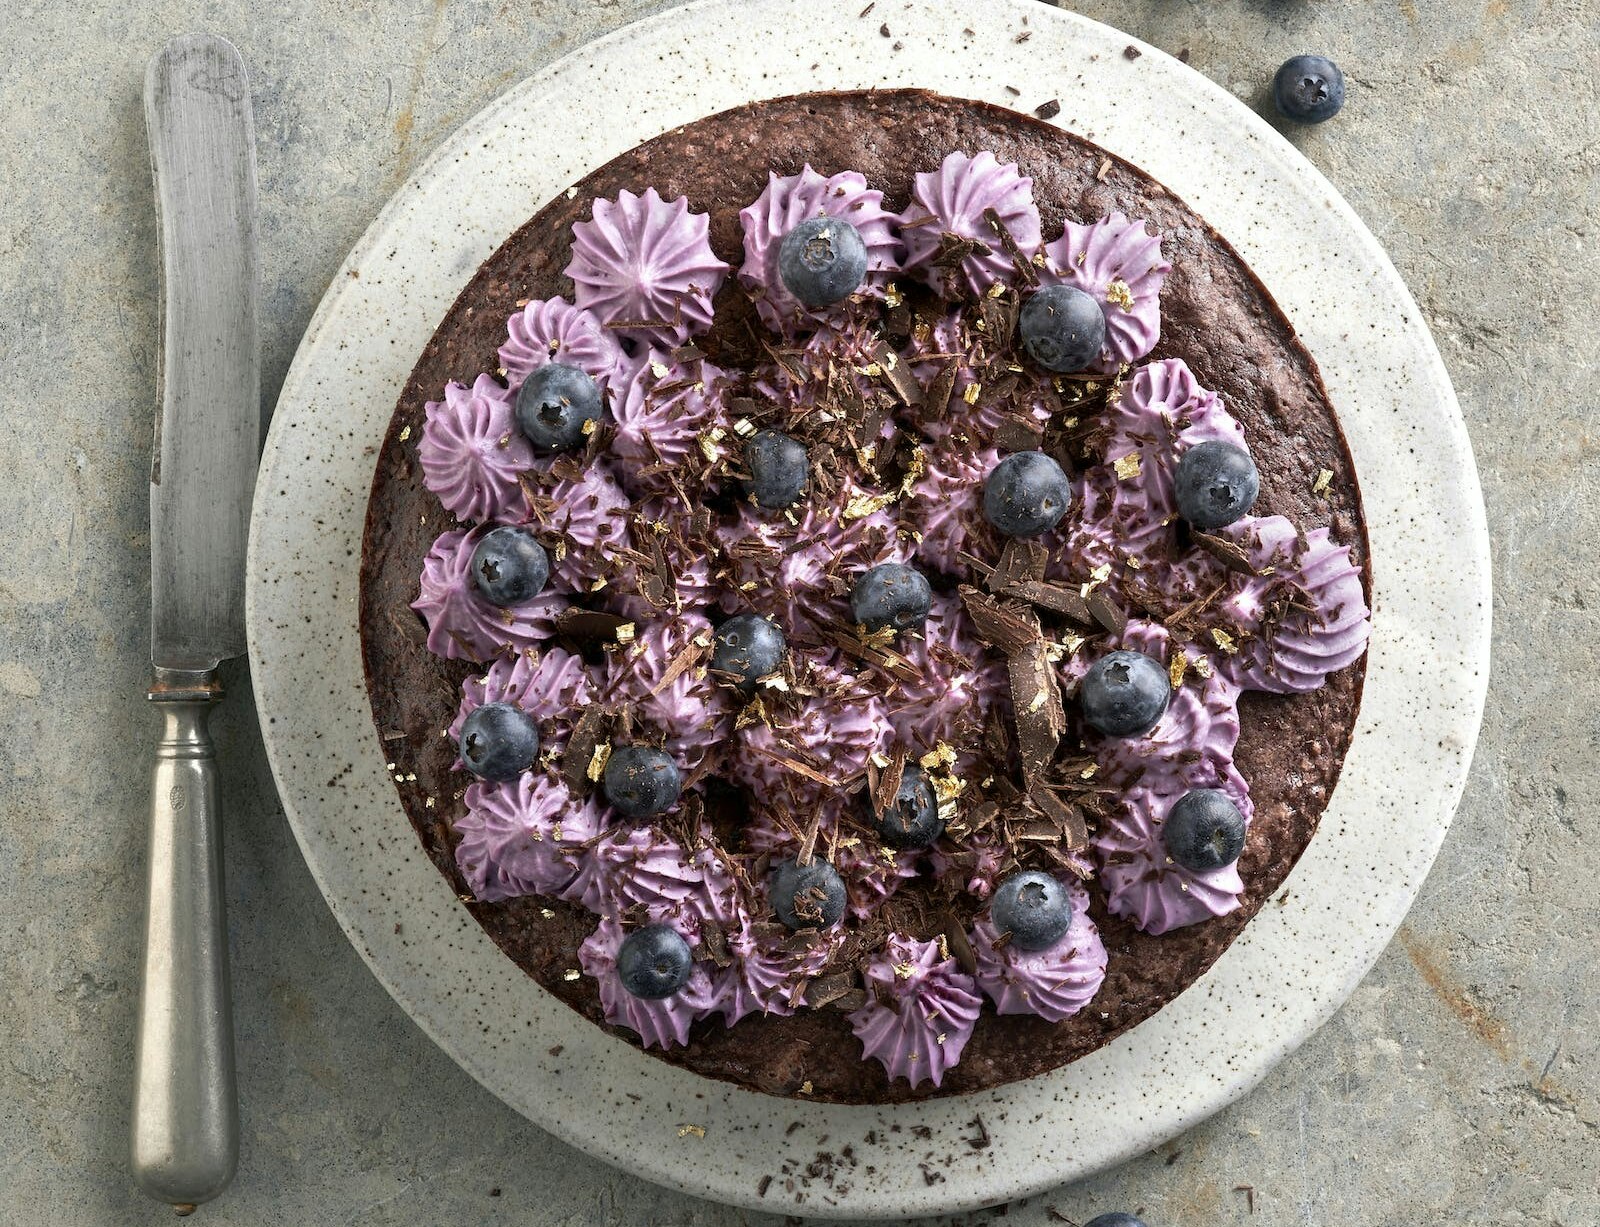 Chokoladekage med blåbærcreme